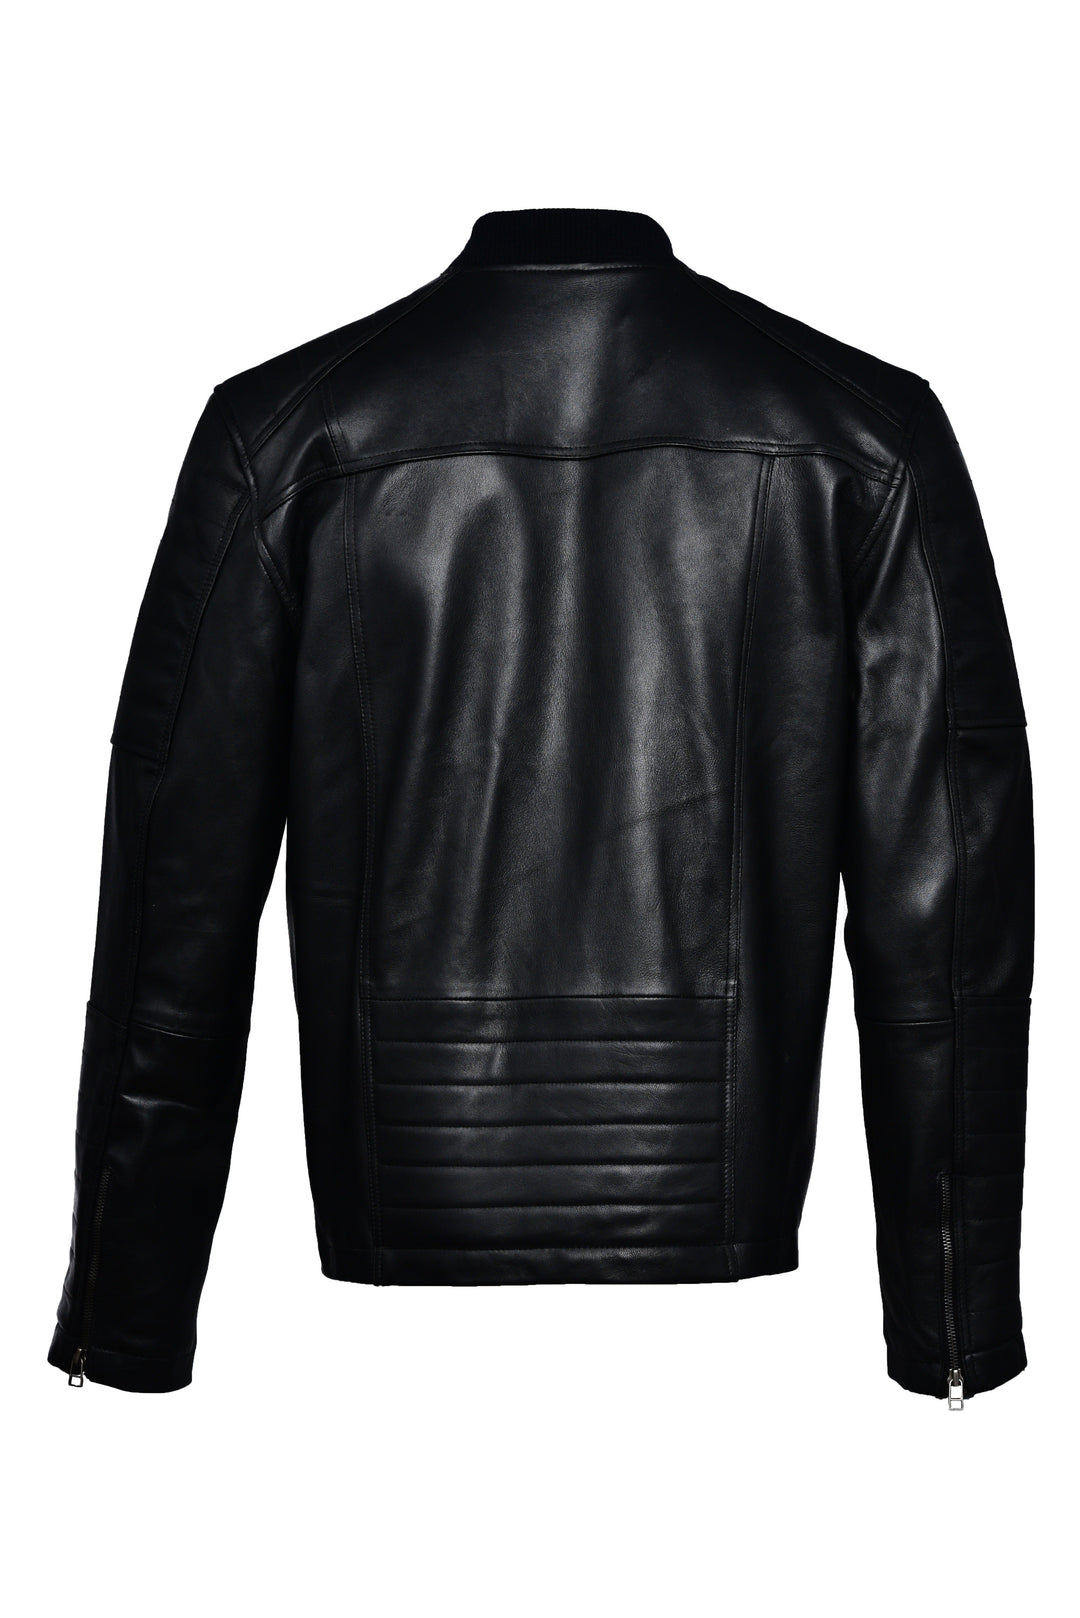 Classic Black Leather Jacket | Men | Sheepskin | Leatherwear | Leatherwear